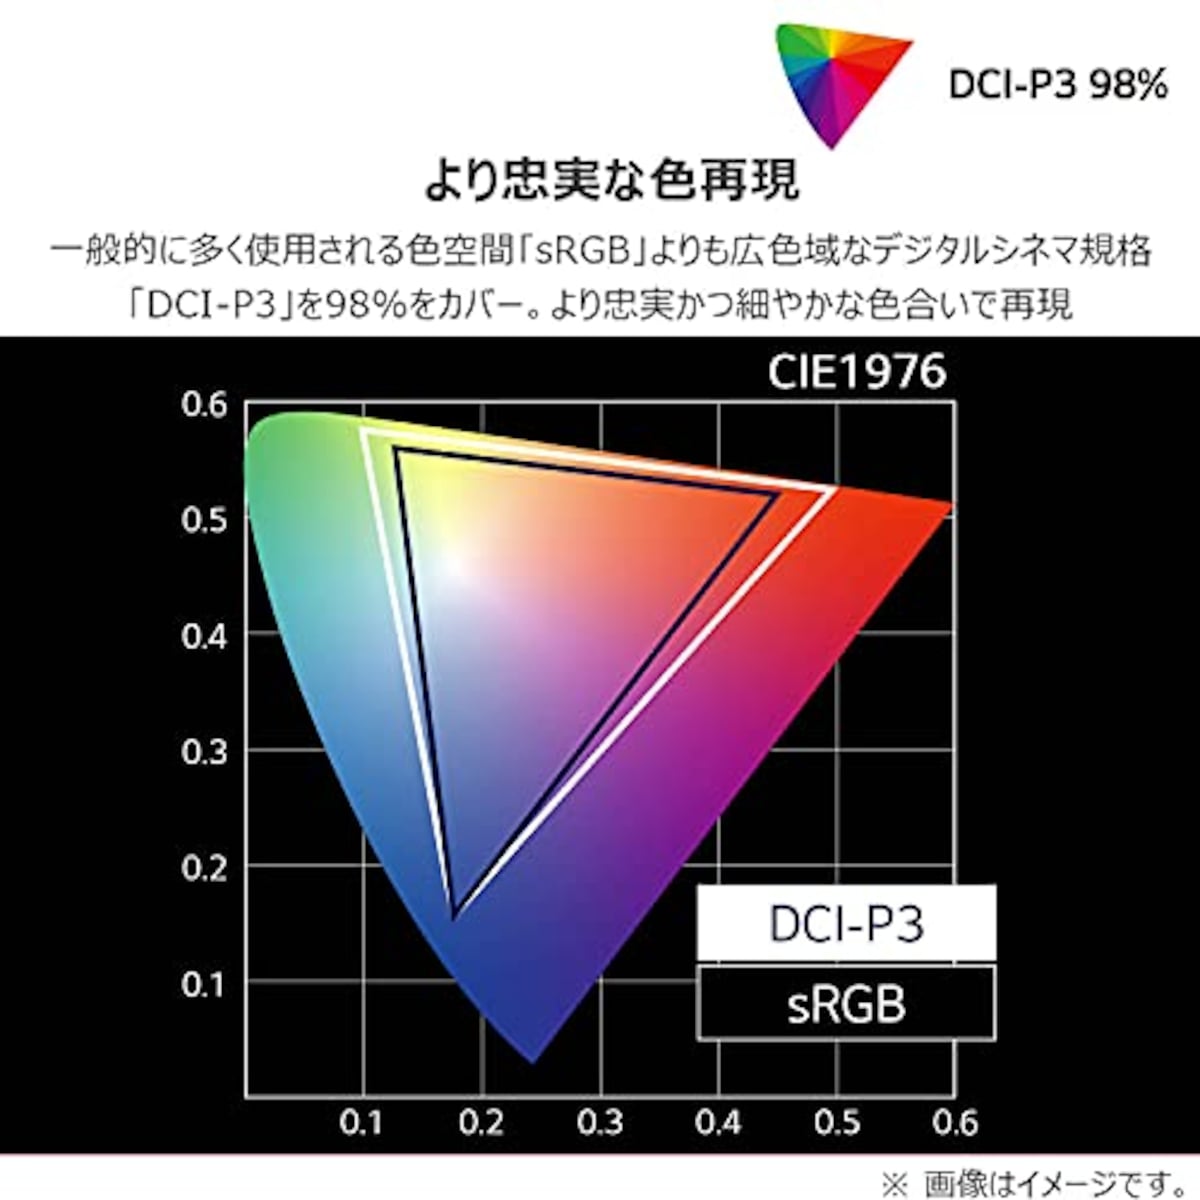  LG ゲーミングモニター UltraGear 27GP83B-B 27インチ/WQHD(2560×1440)/Nano IPS/1ms(GtoG)/165Hz/DCI-P3 98%/G-SYNC Compatible、Freesync Premium/HDR対応/HDMI×2,DisplayPort/ピボット,高さ調節対応/無輝点保証画像5 